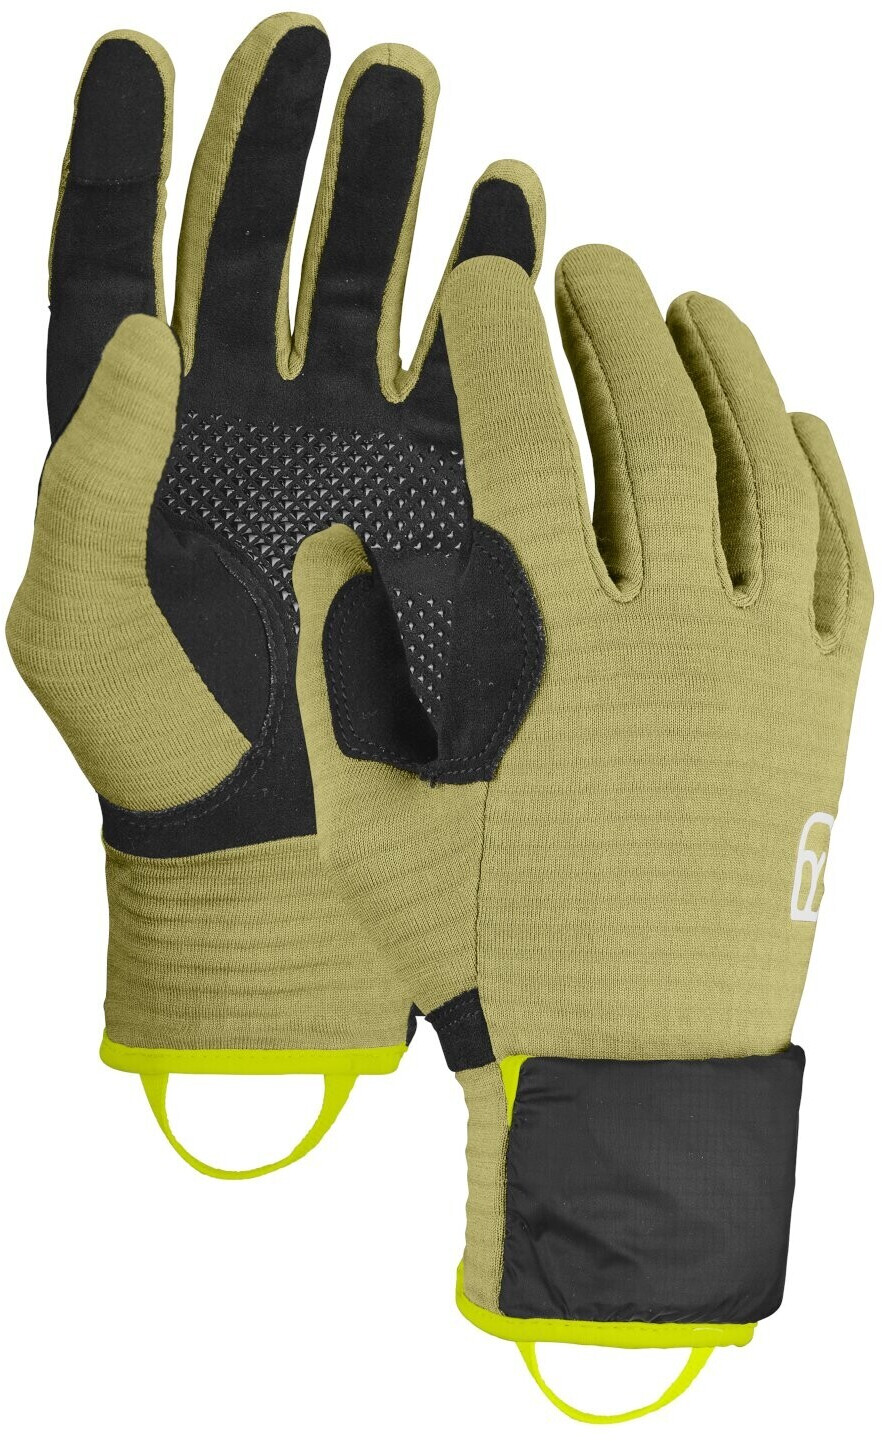 Ortovox Fleece Grid Cover Glove M (56371) sweet alison ab 42,04 € |  Preisvergleich bei